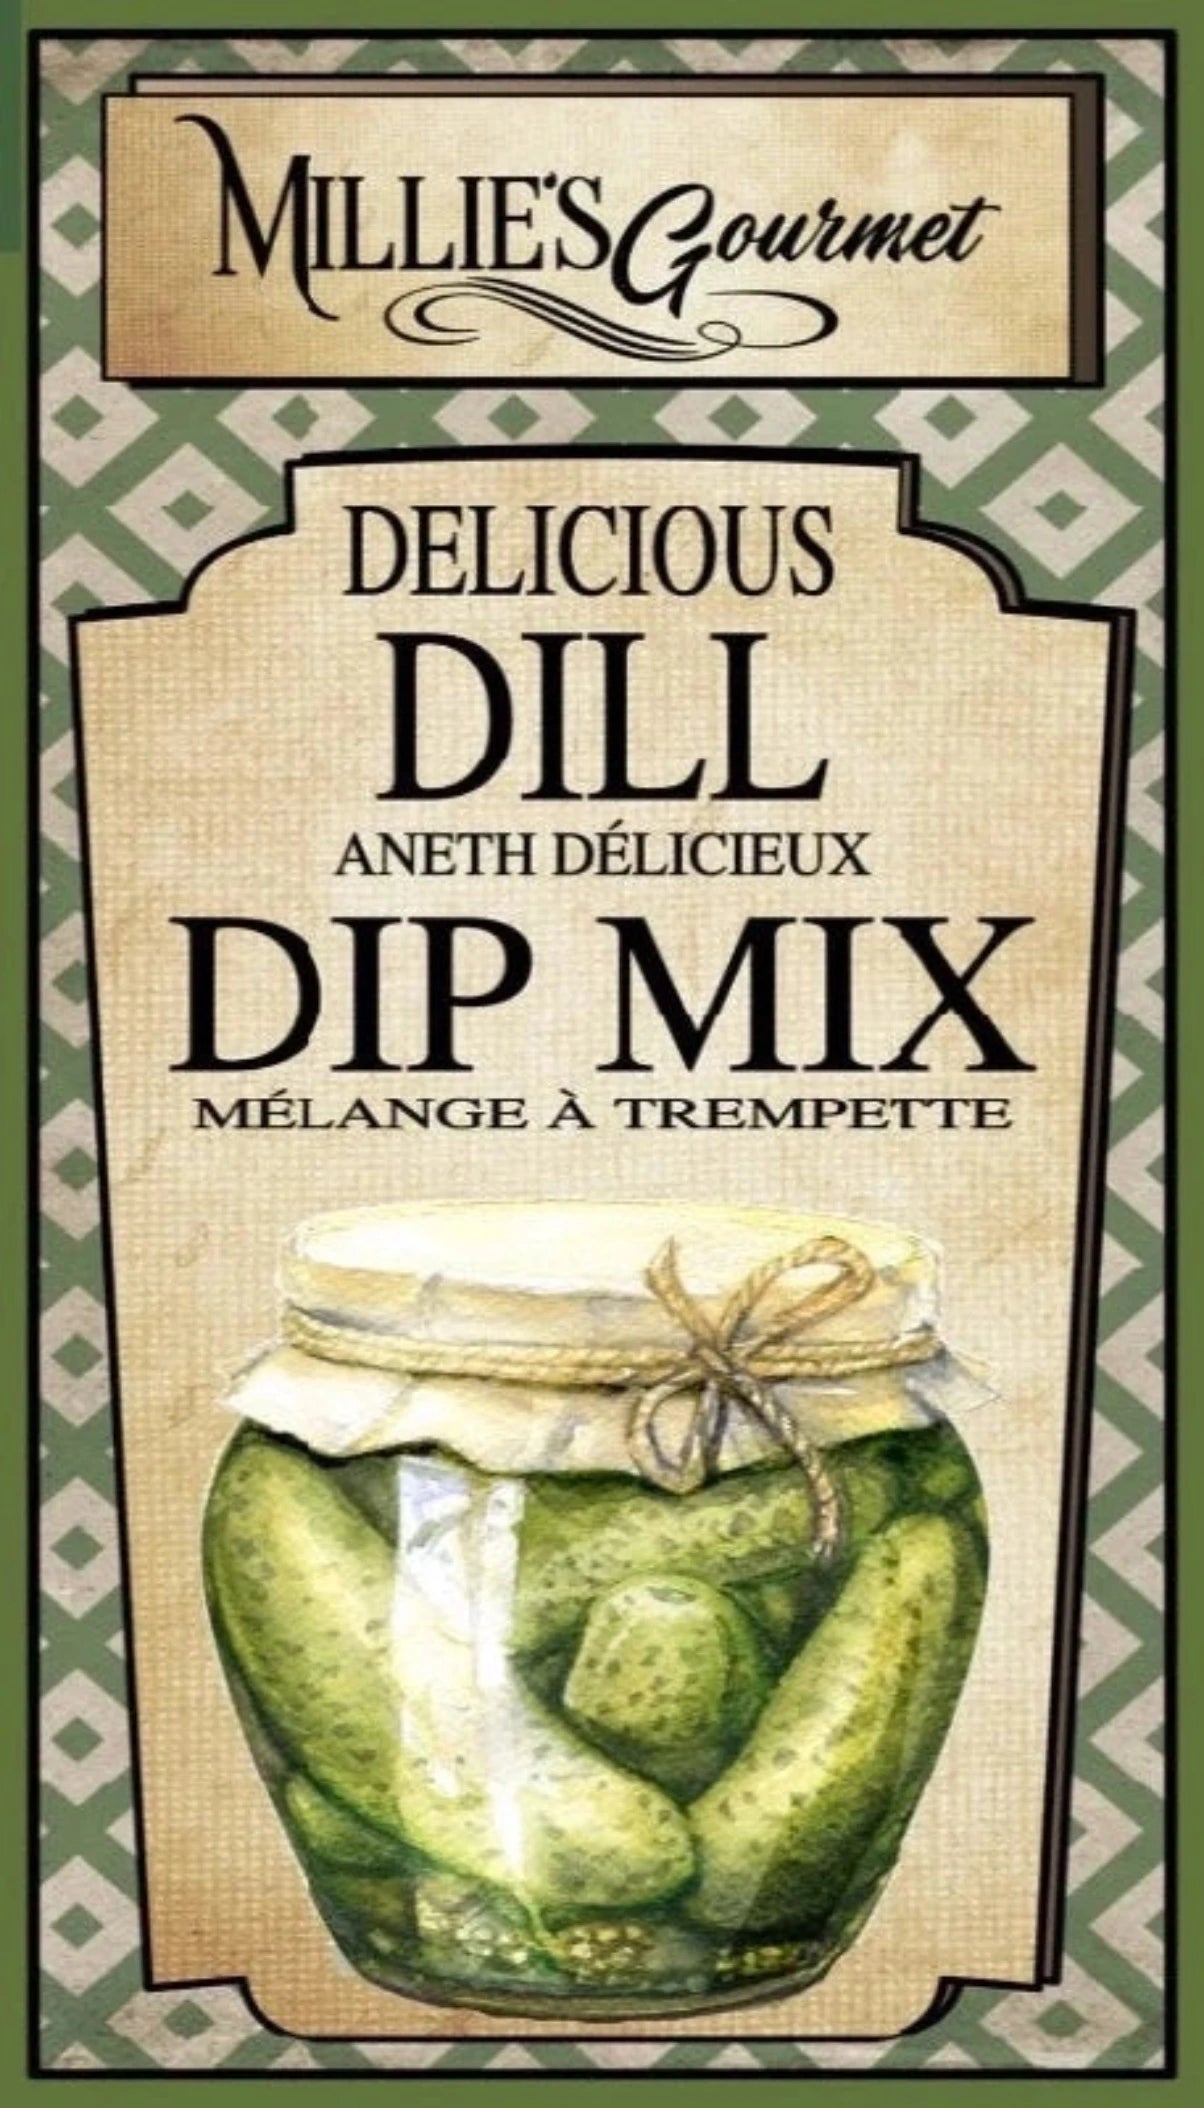 Delicious Dill Dip